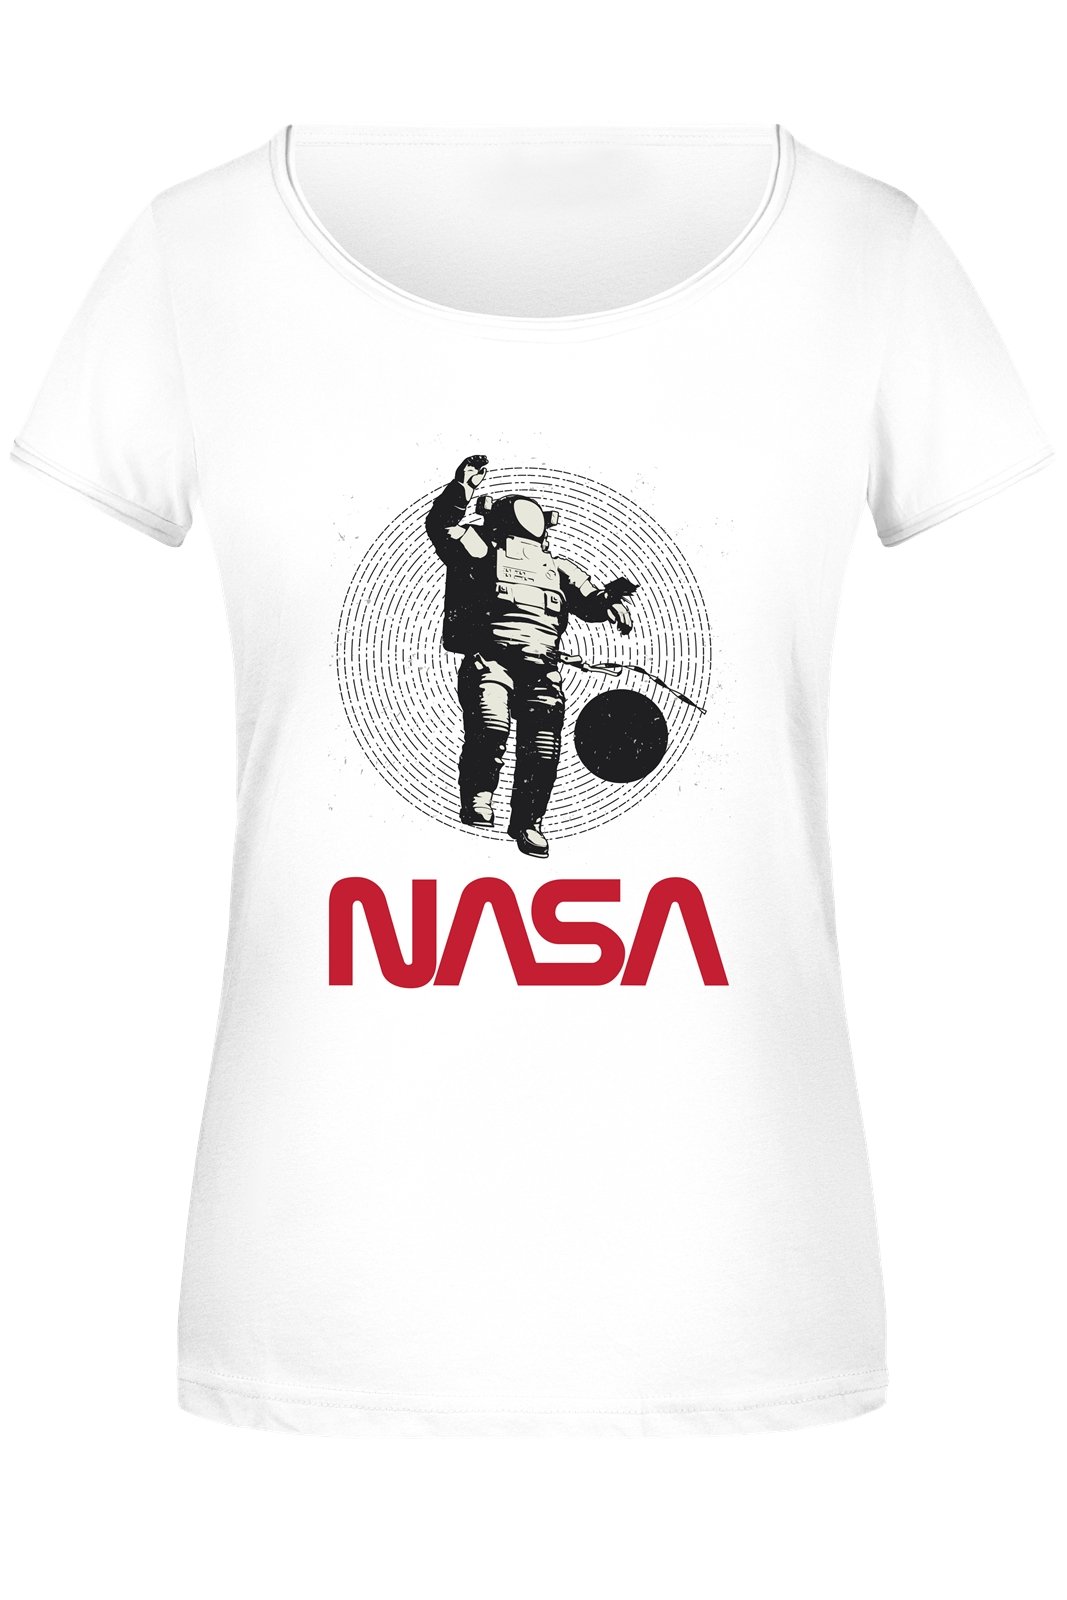 Bild: T-Shirt Damen - NASA Astronaut (Retro) Geschenkidee